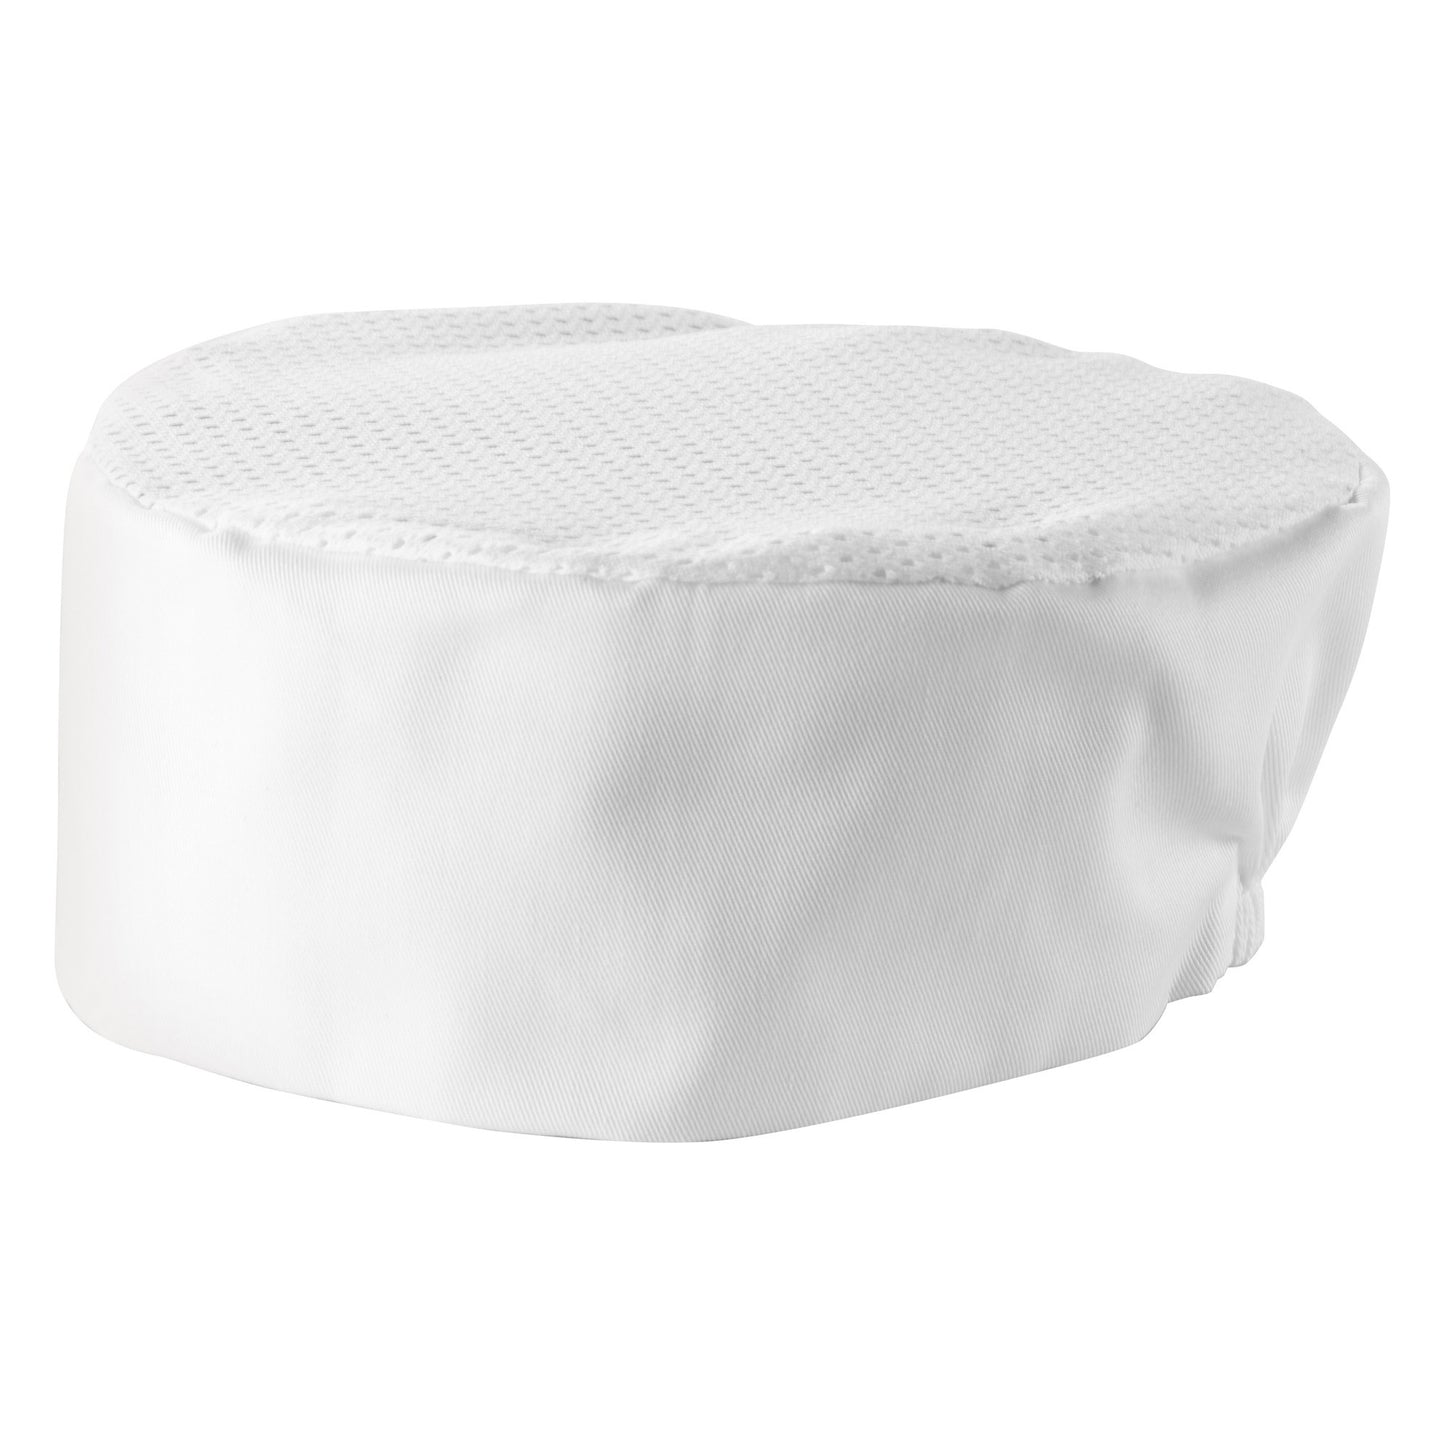 CHPB-3WR - Ventilated Pillbox Hats - White, Regular